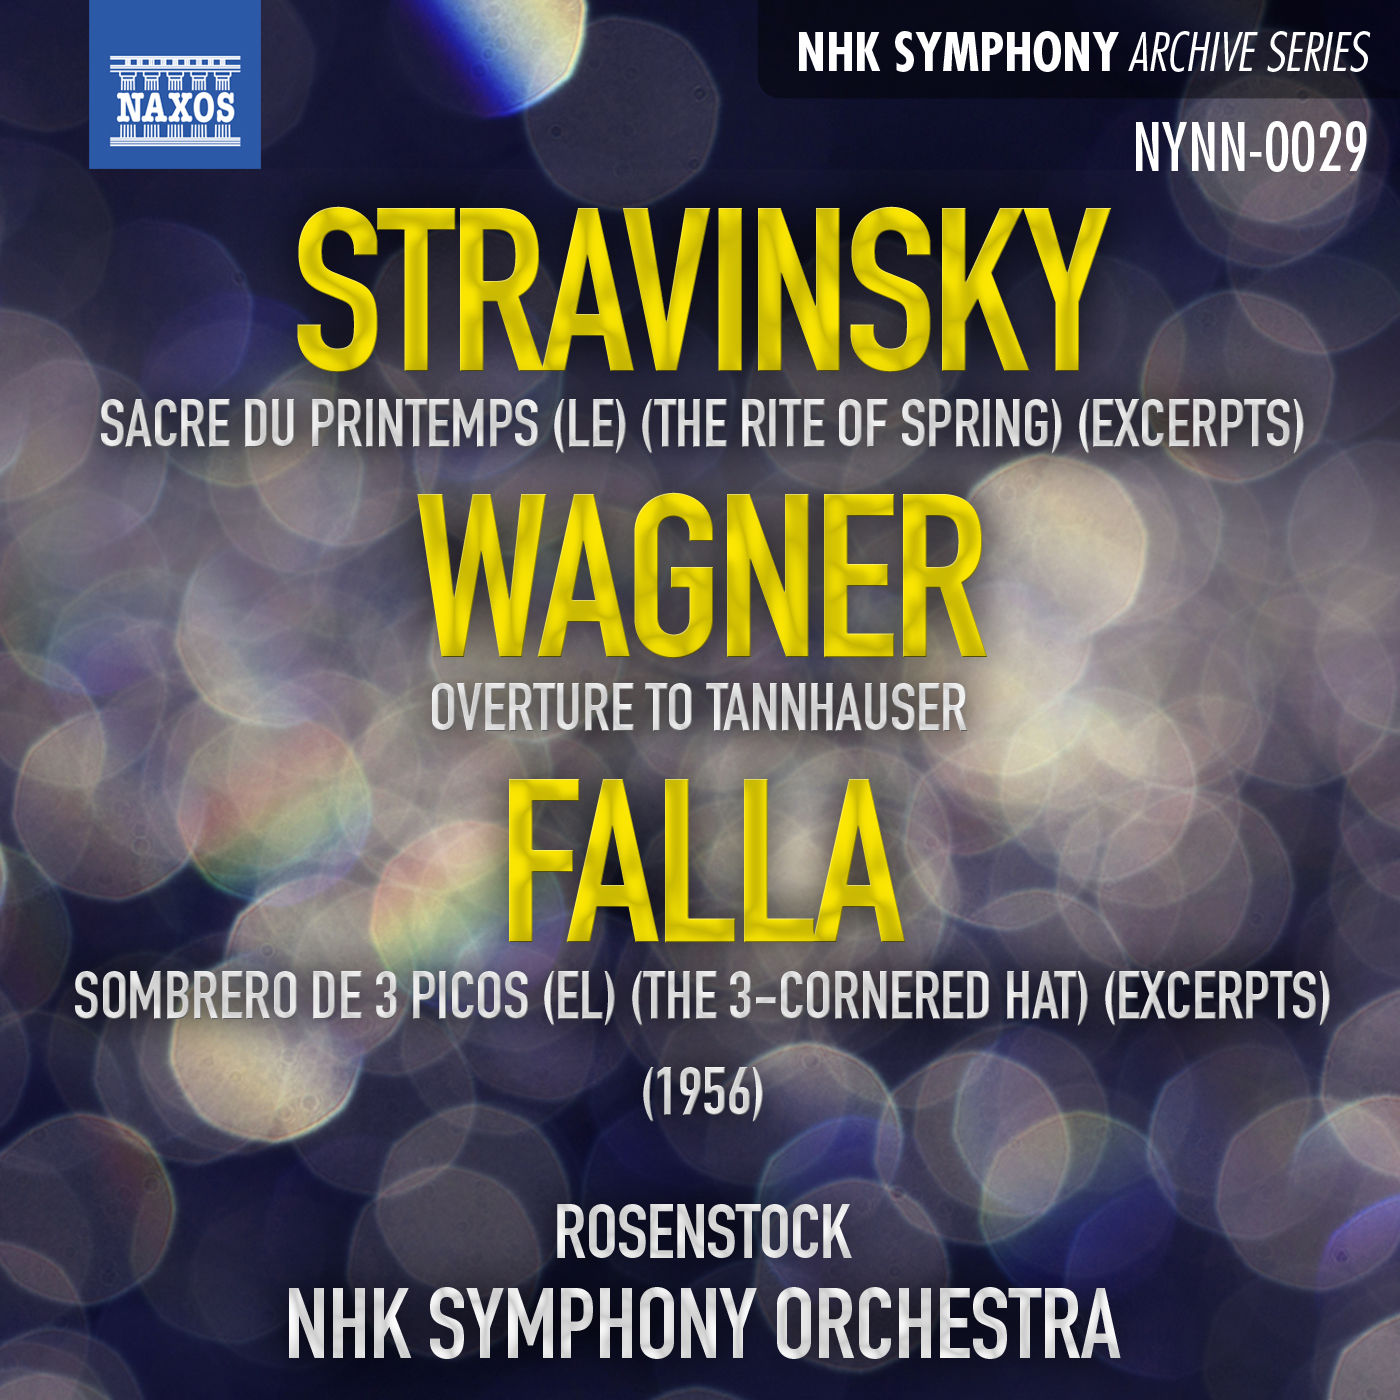 NHK Symphony Orchestra – Stravinsky, Wagner & Falla- Orchestral Works